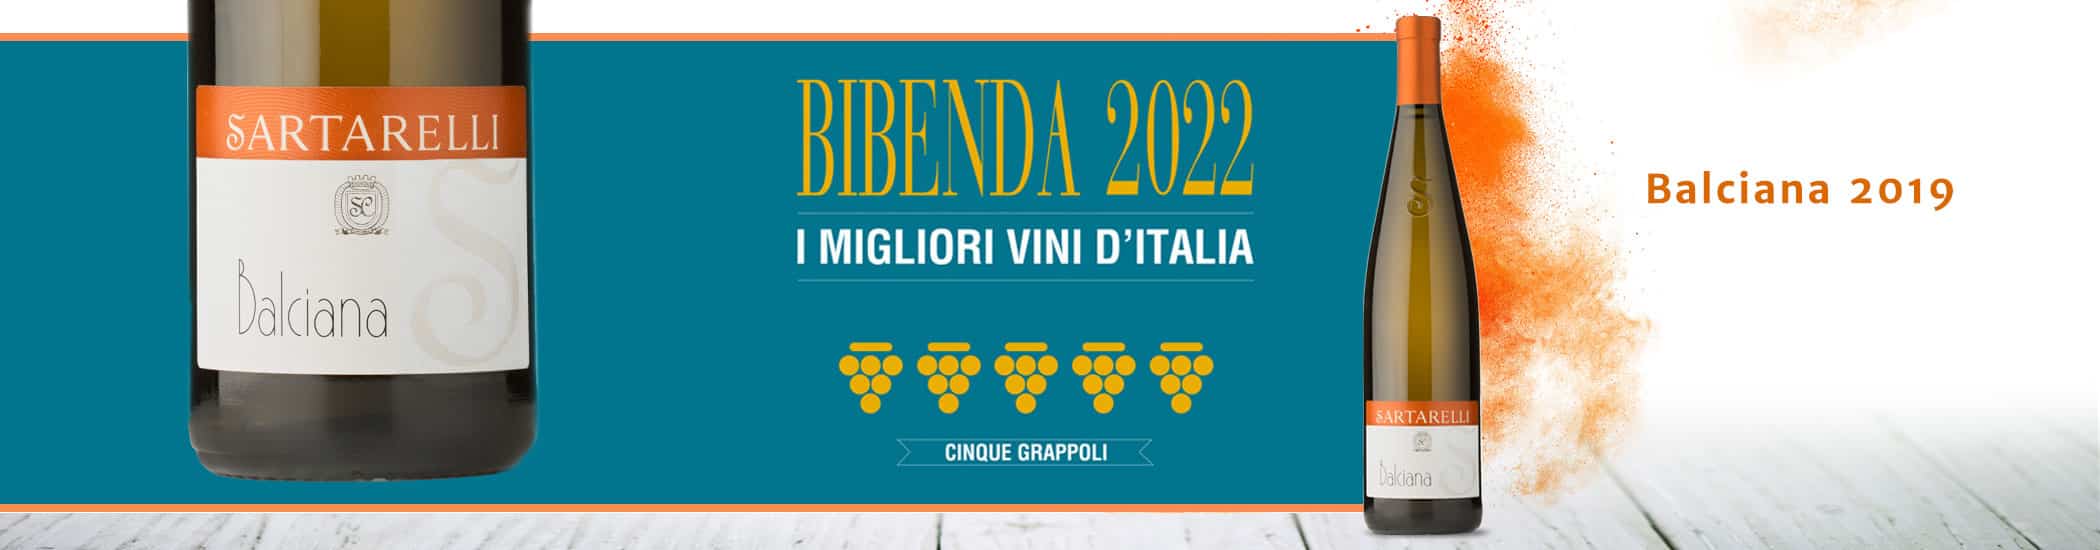 Sartarelli-Balciana 2019-5 Grappoli (News)